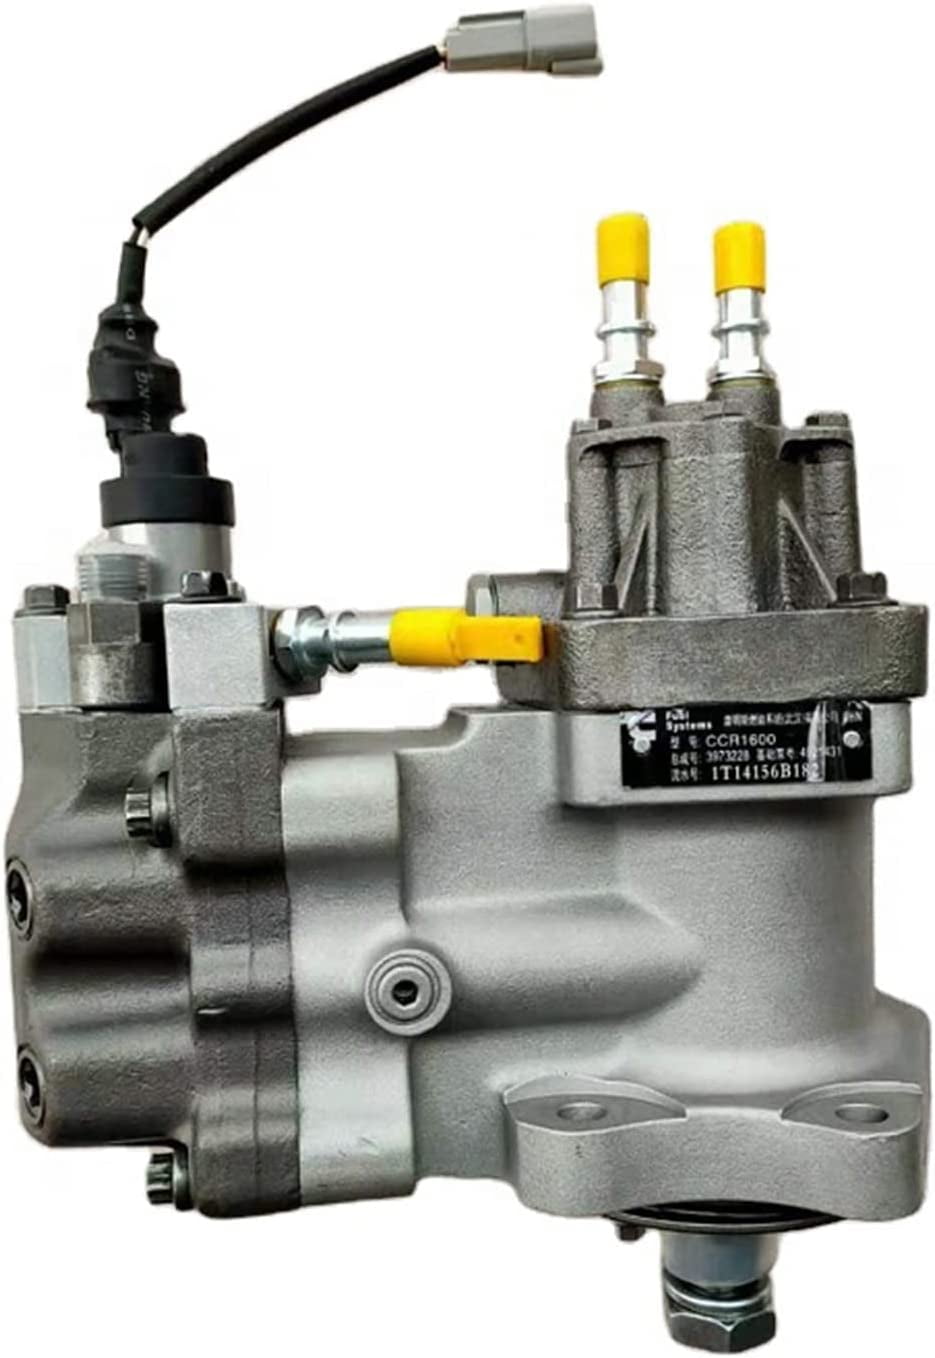 MECARUN C99 Fuel 2 and 4 stroke engines - fuel economy treatment 250ml